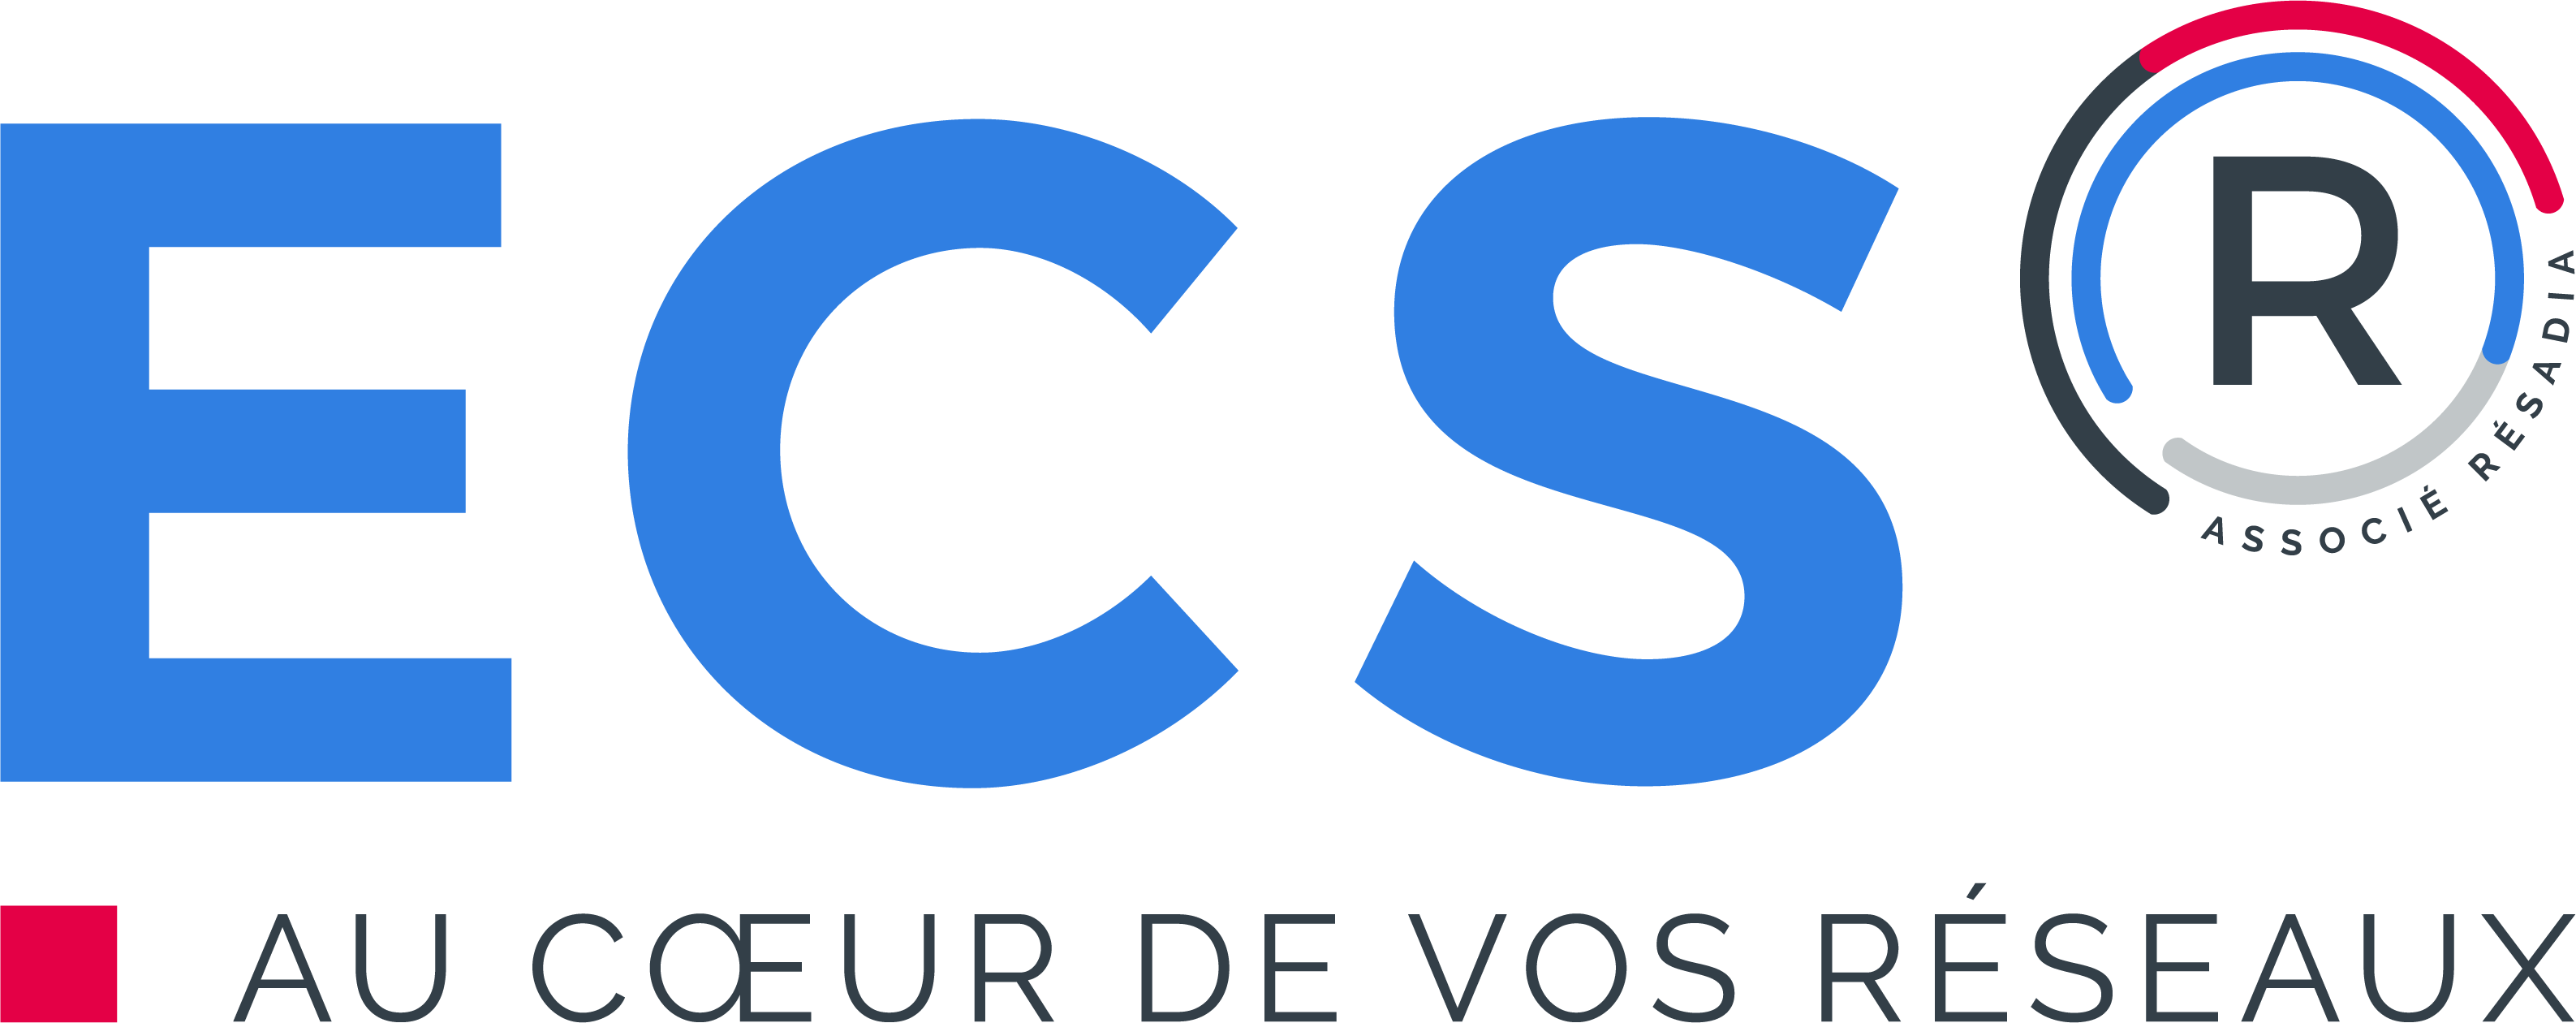 Logo ECS I Directrice artistique I Graphisme - Illustration - Photographie I Dôriane I Haguenau, Alsace